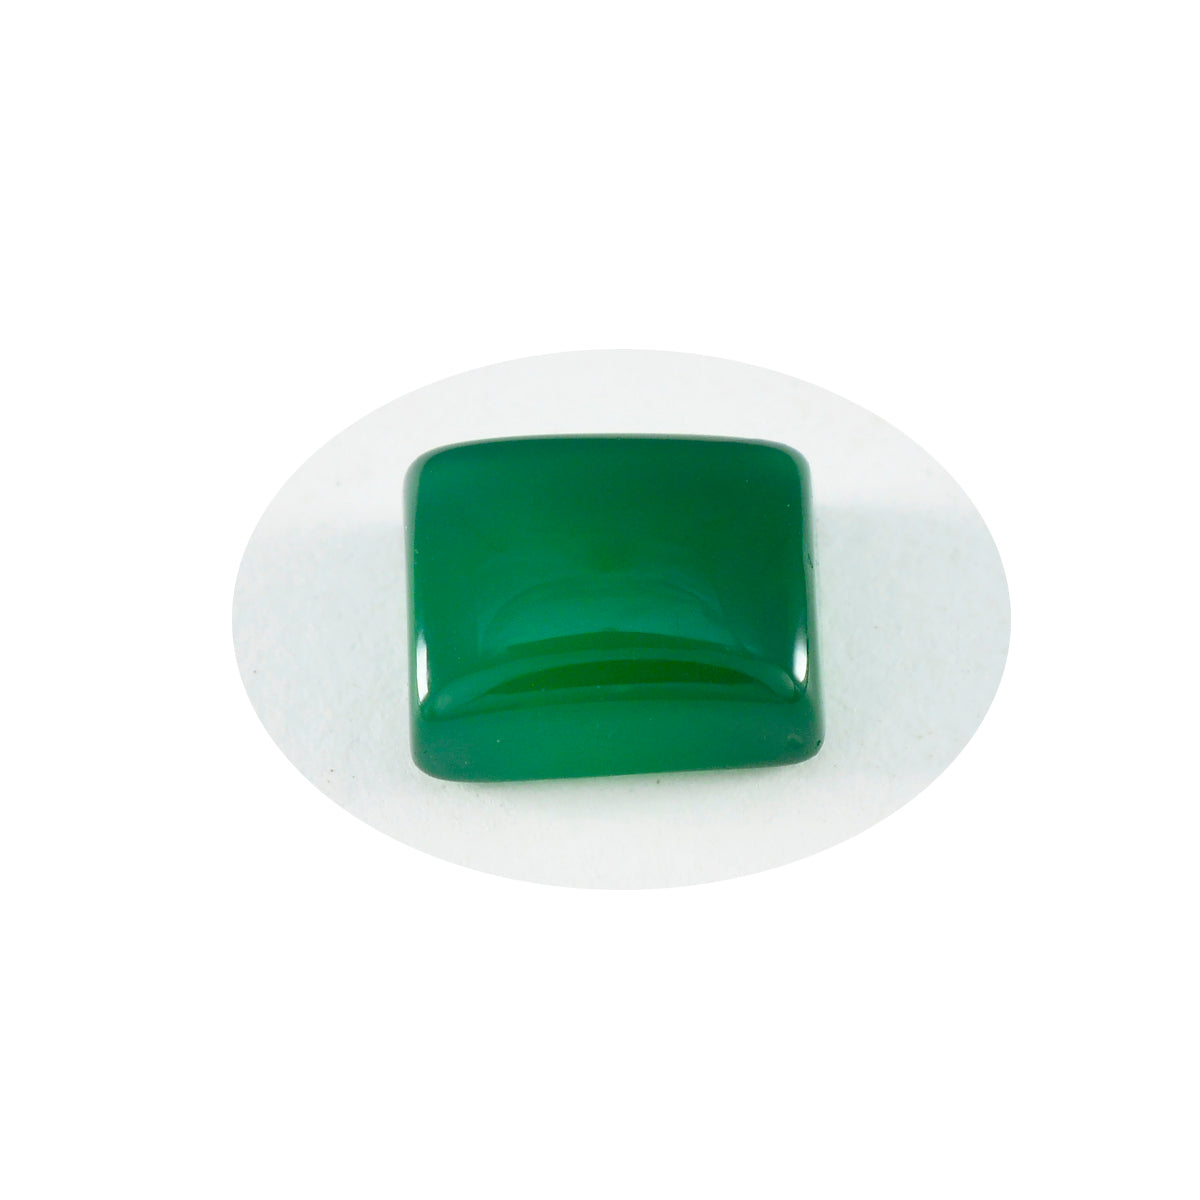 Riyogems 1PC groene onyx cabochon 9x11 mm achthoekige vorm knappe kwaliteit edelsteen